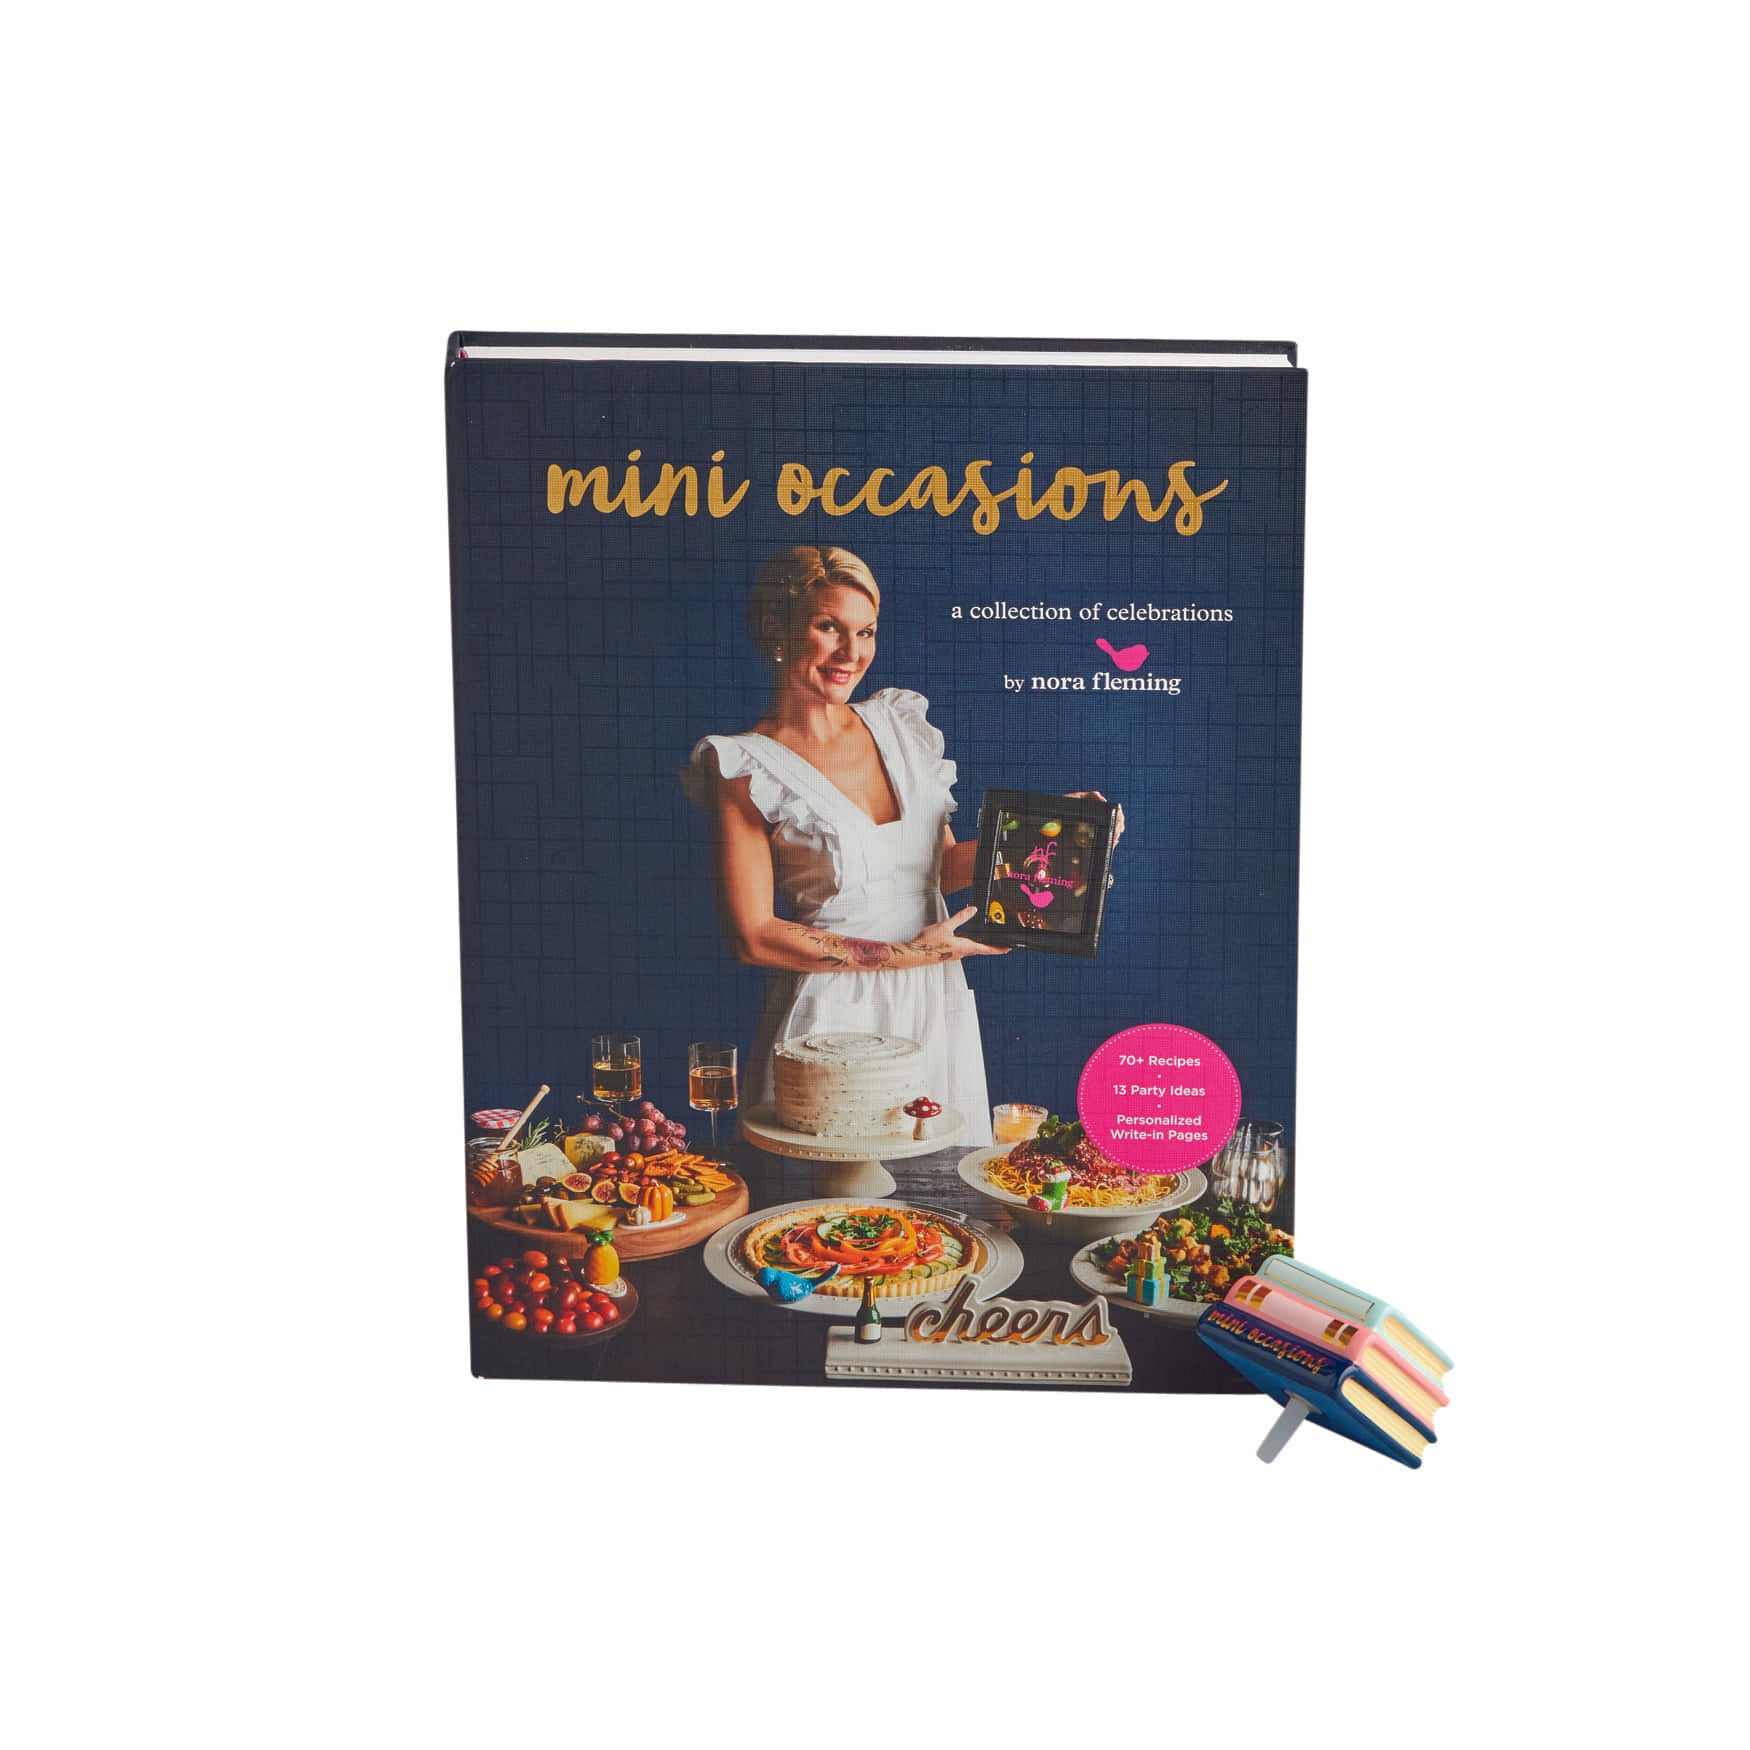 Nora Fleming Cookbook “Mini Occasions” with Mini